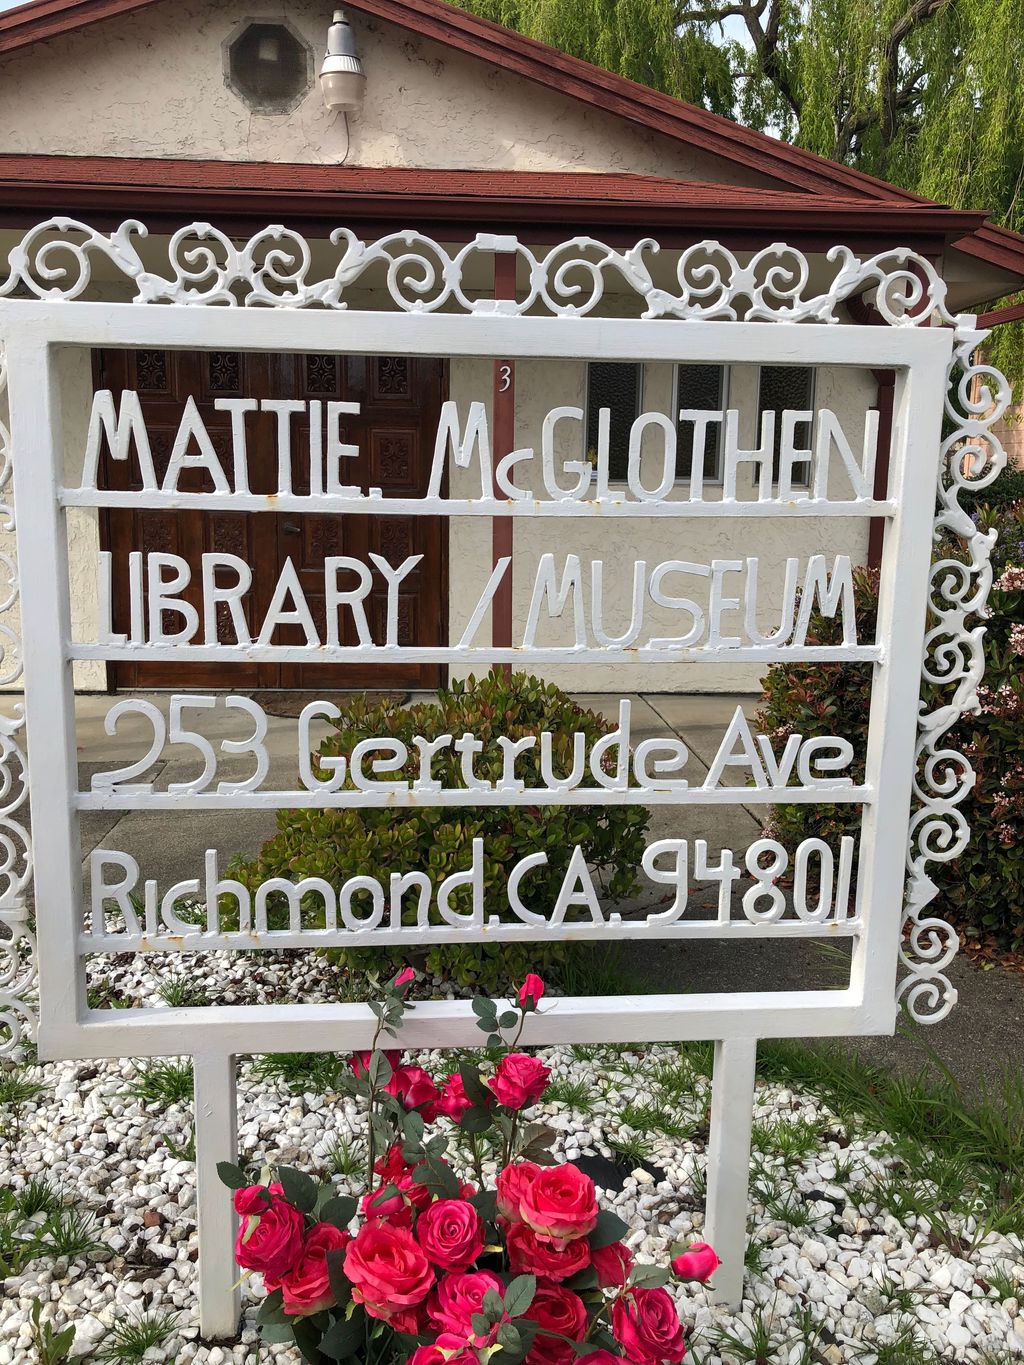 Dr. Mattie McGlothen Library/Museum